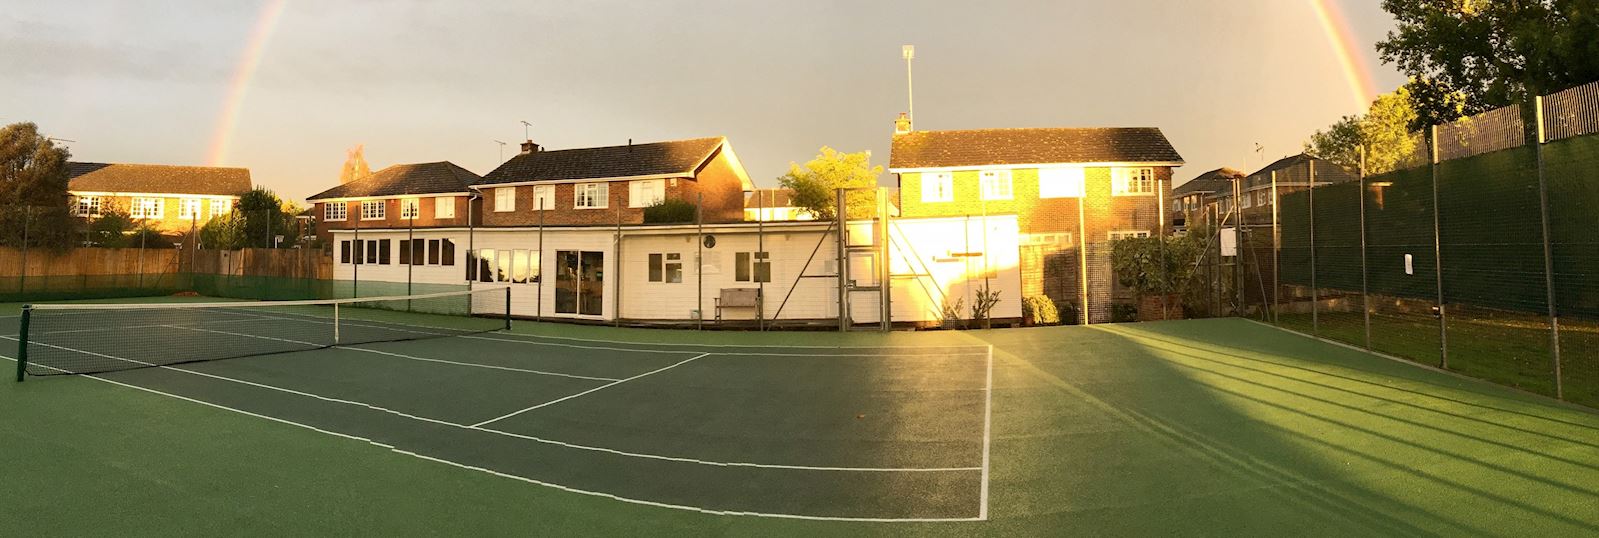 Cuckfield Lawn Tennis Club